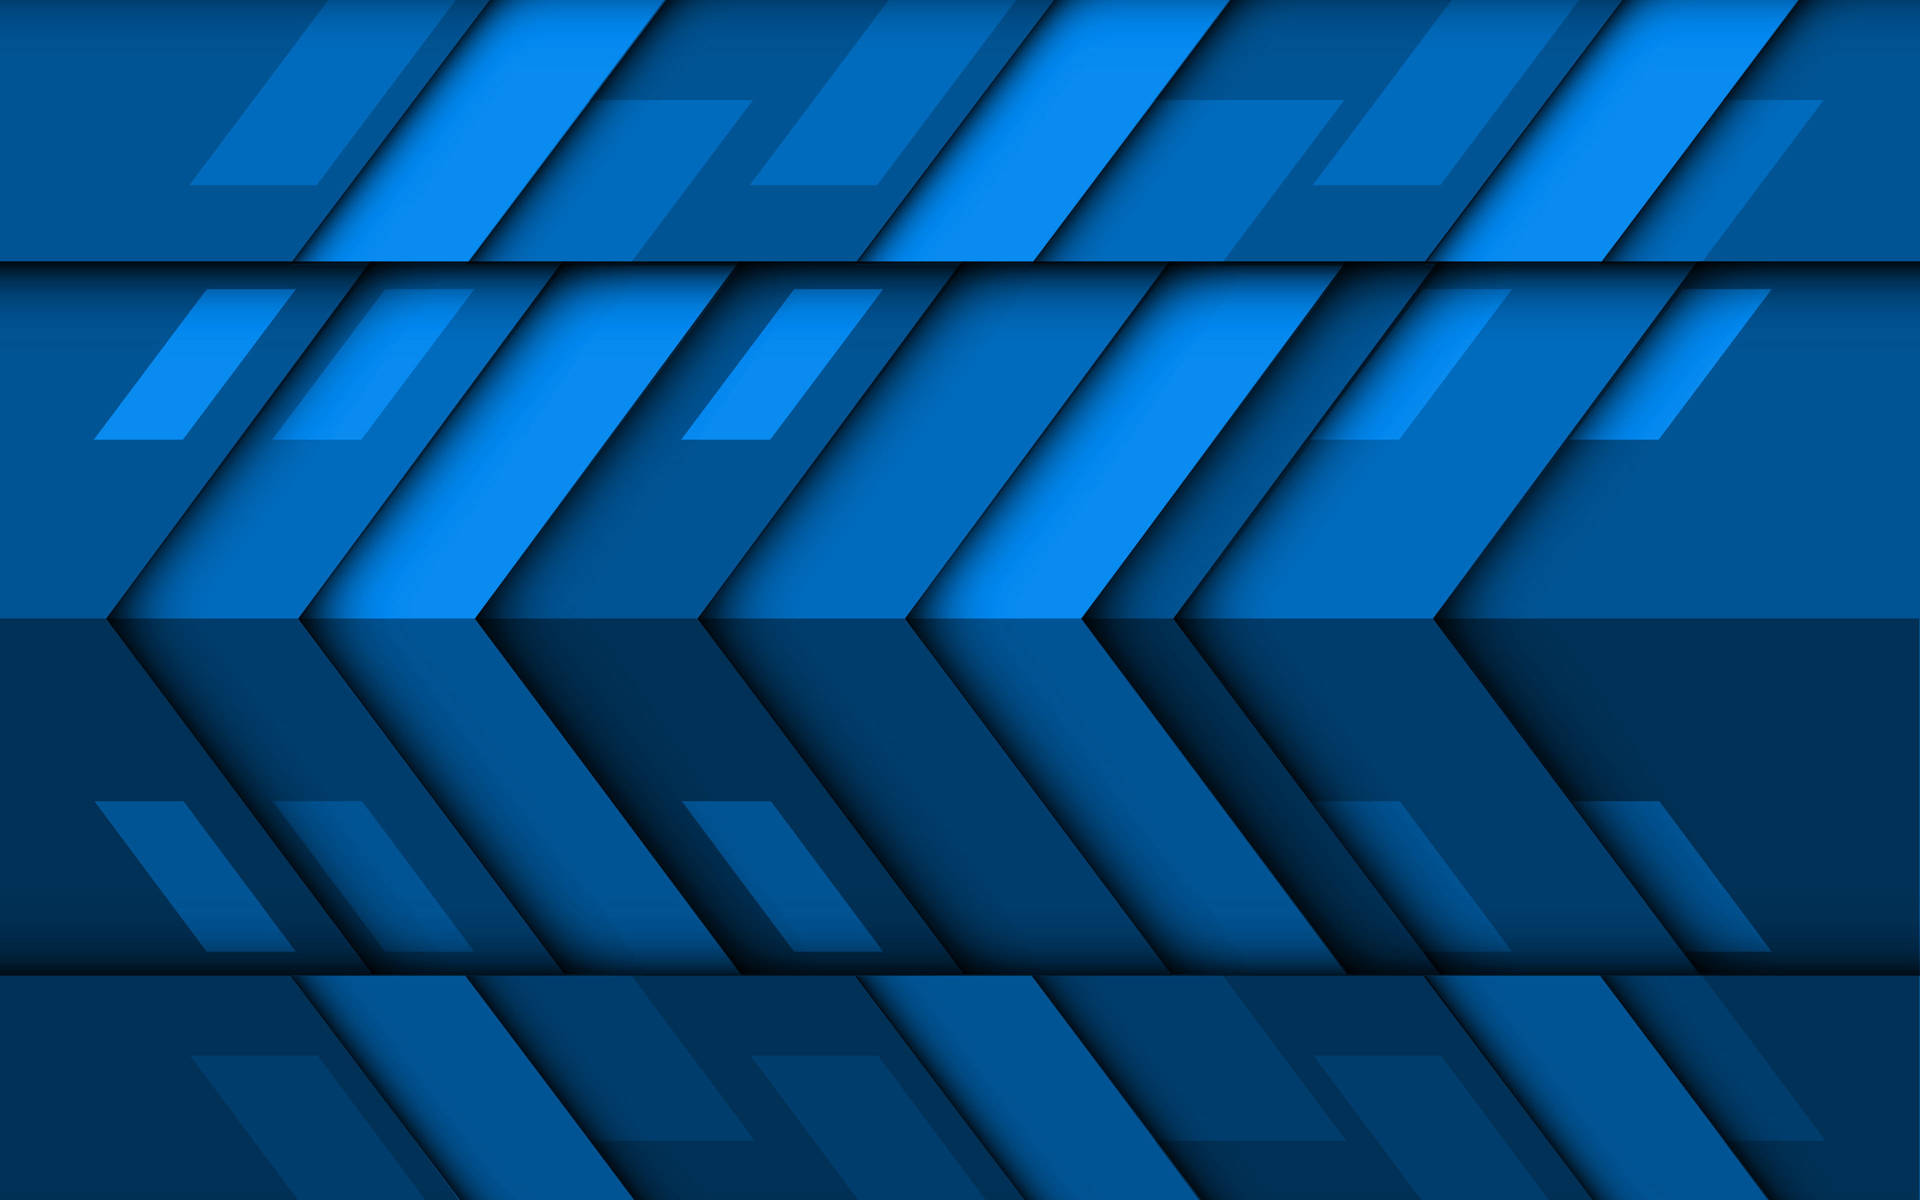 Blue Arrow Material Design Wallpaper